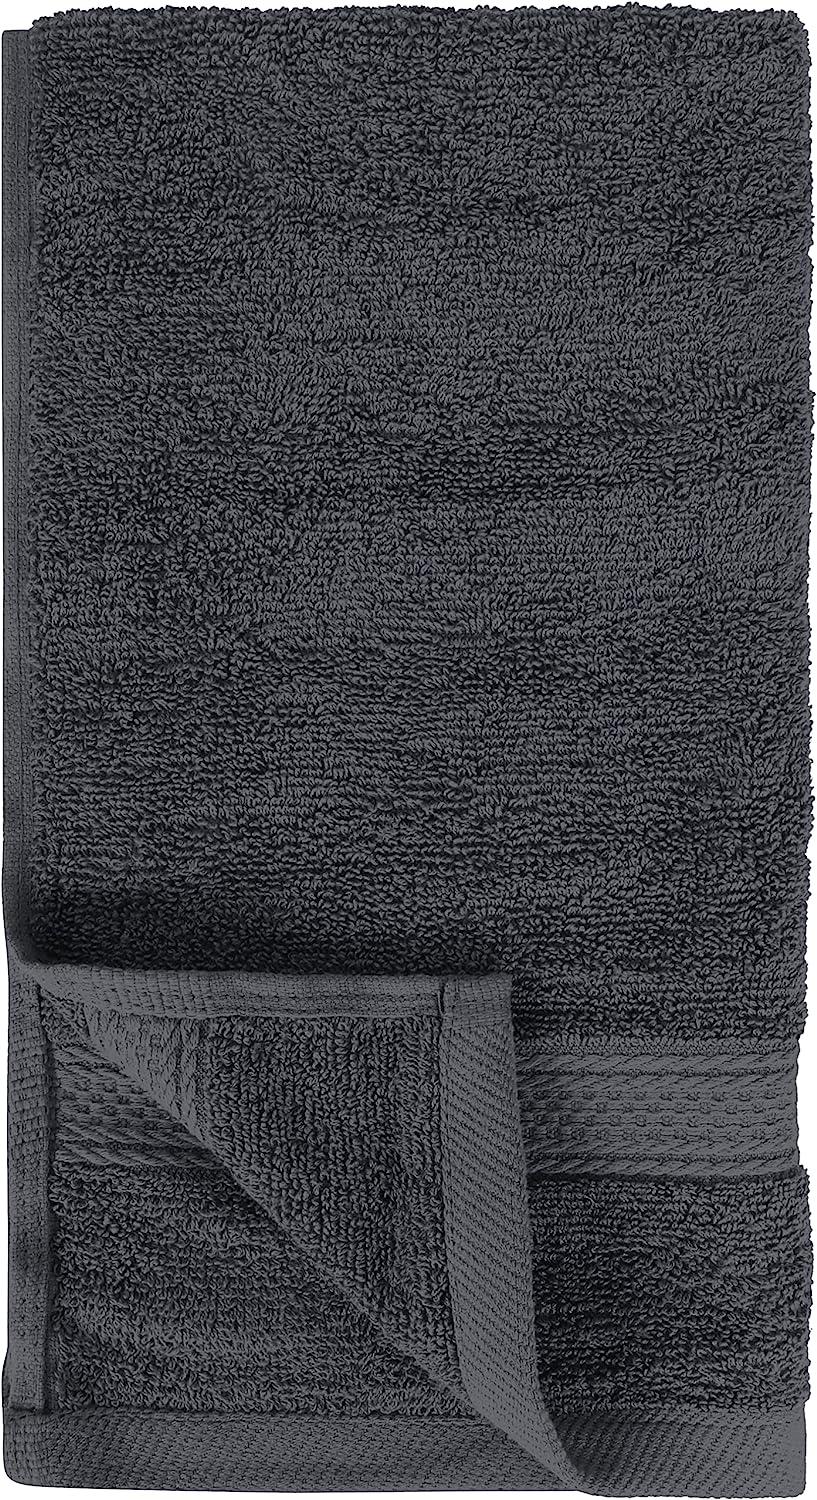  Utopia Towels 12 Bundle Pack - Bath Towel Set (6-Pack